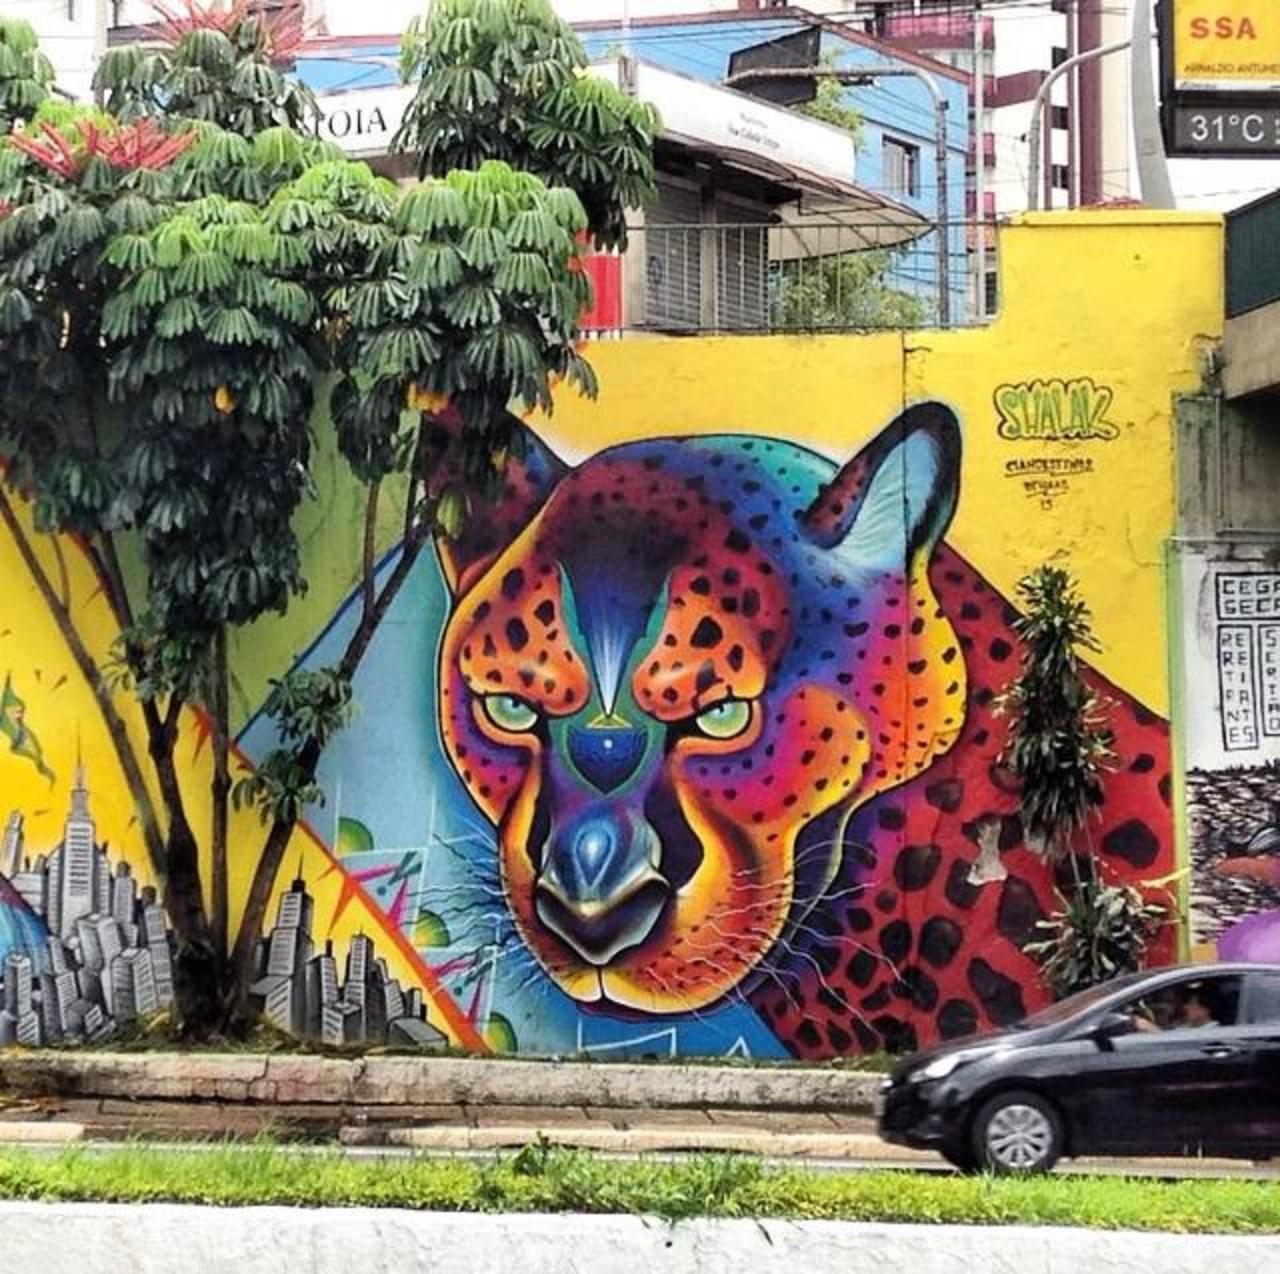 Artist ShalakAttack beautiful & colourful nature in Street Art piece in São Paulo 

#art #graffiti #mural #streetart http://t.co/fleykghUJN